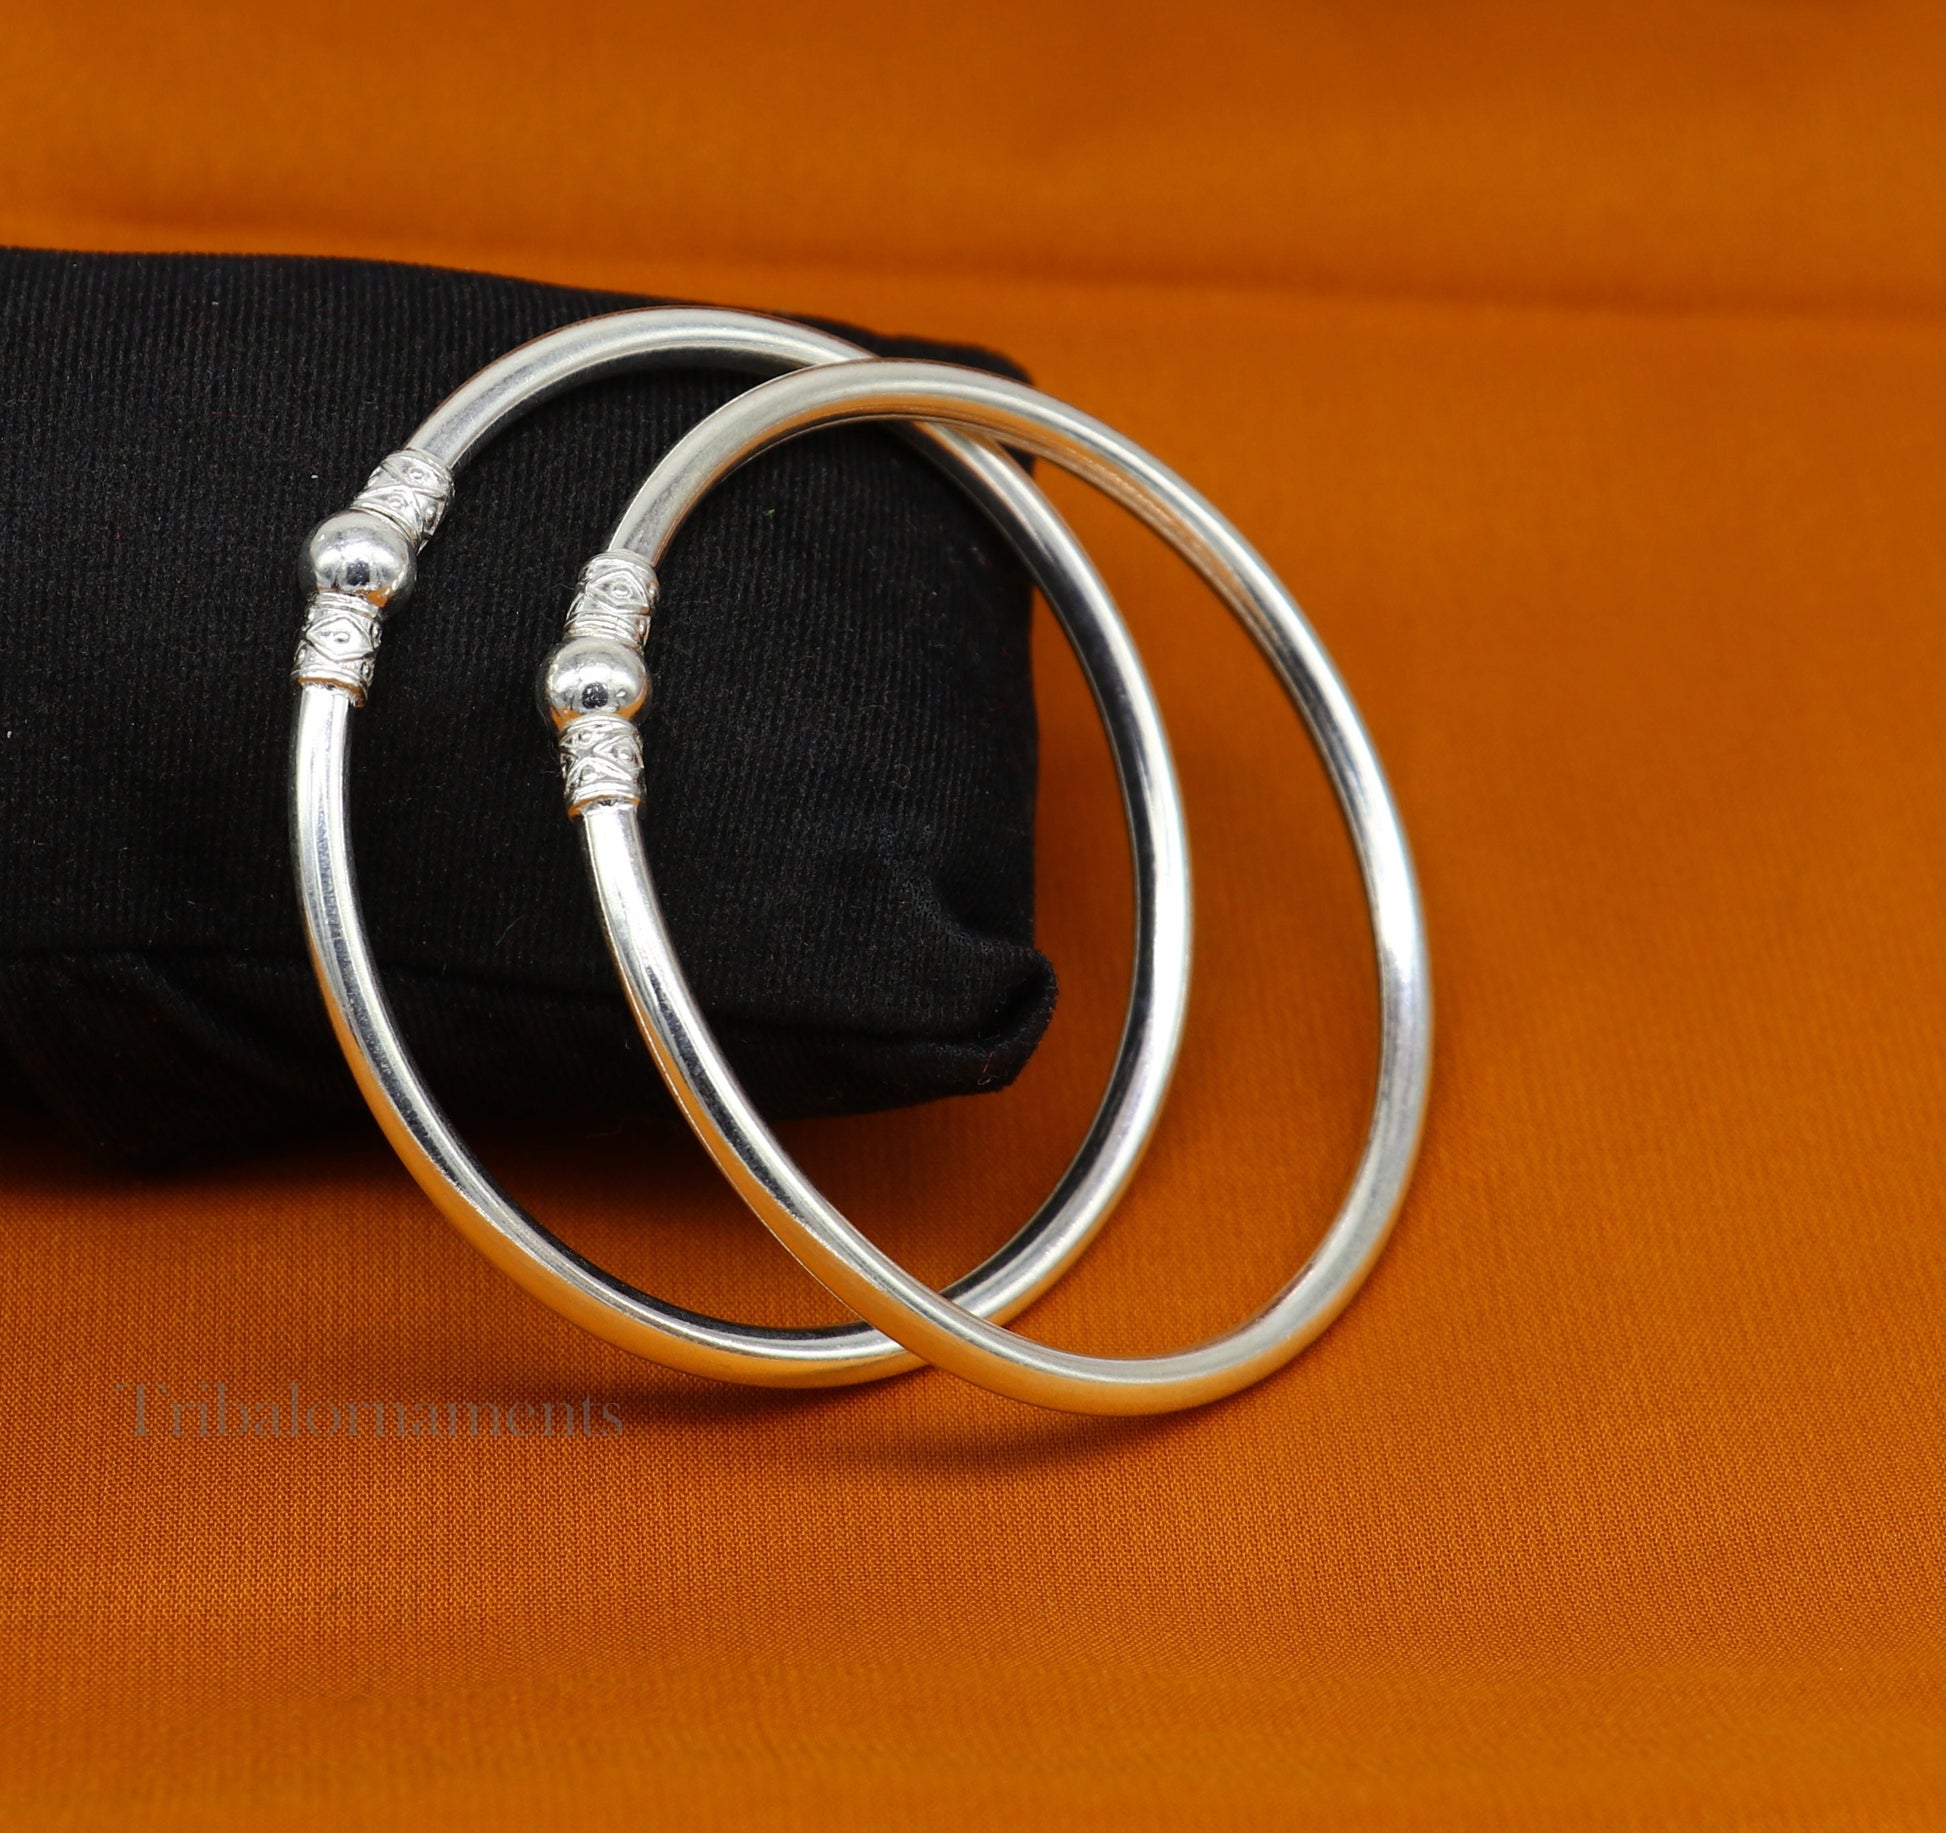 Amazing sterling silver plain shiny design Round bangle bracelet kada, best fancy stylish brides bangle belly dance jewelry nba225 - TRIBAL ORNAMENTS